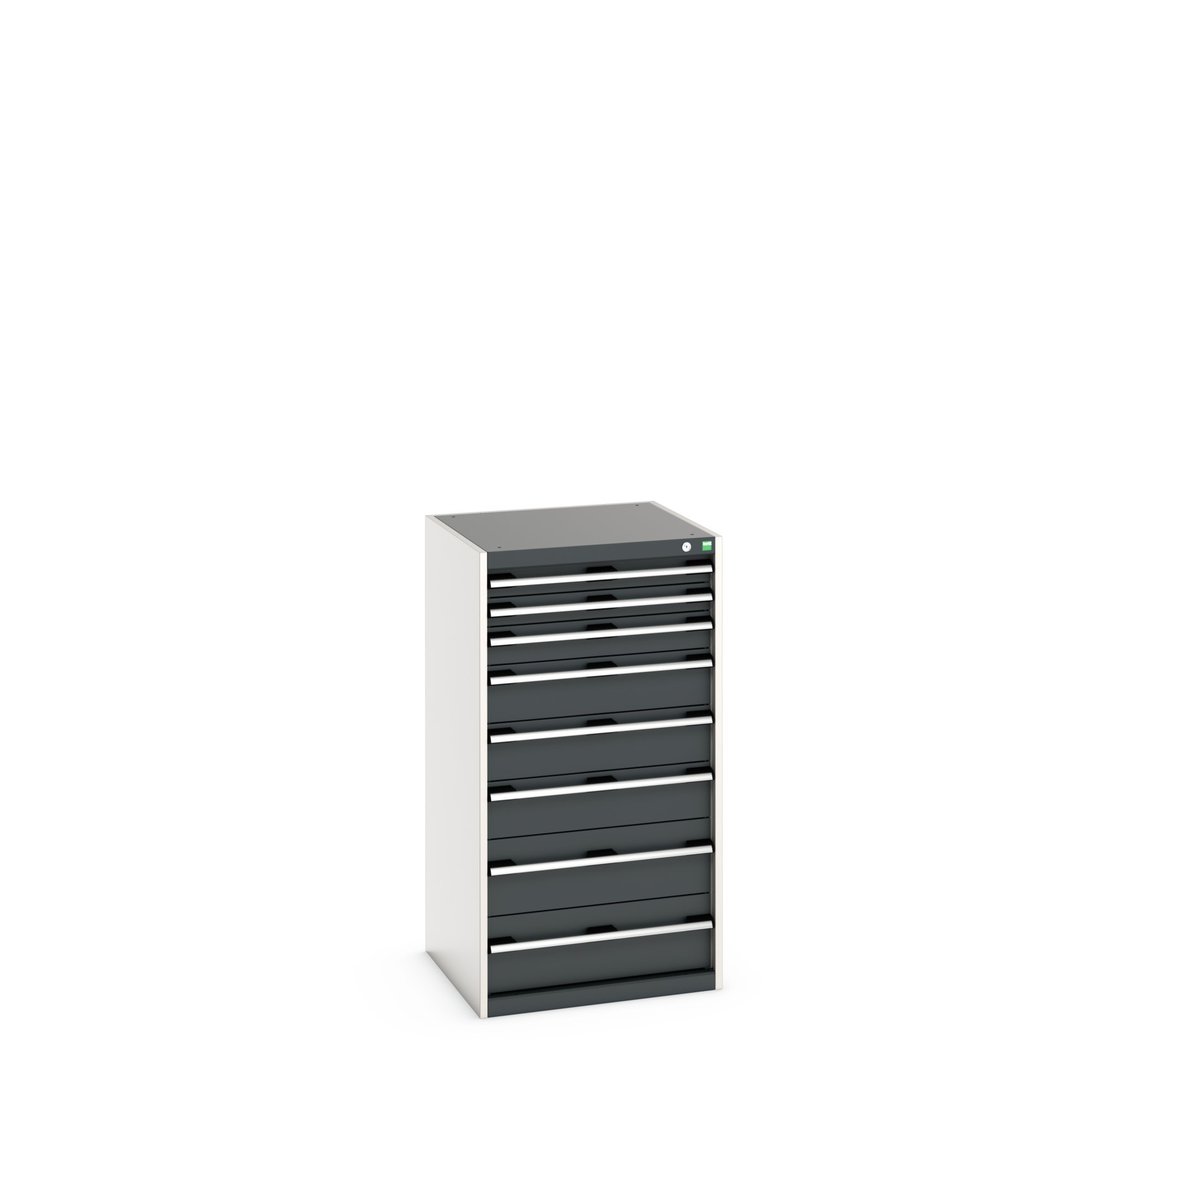 40019071. - cubio drawer cabinet